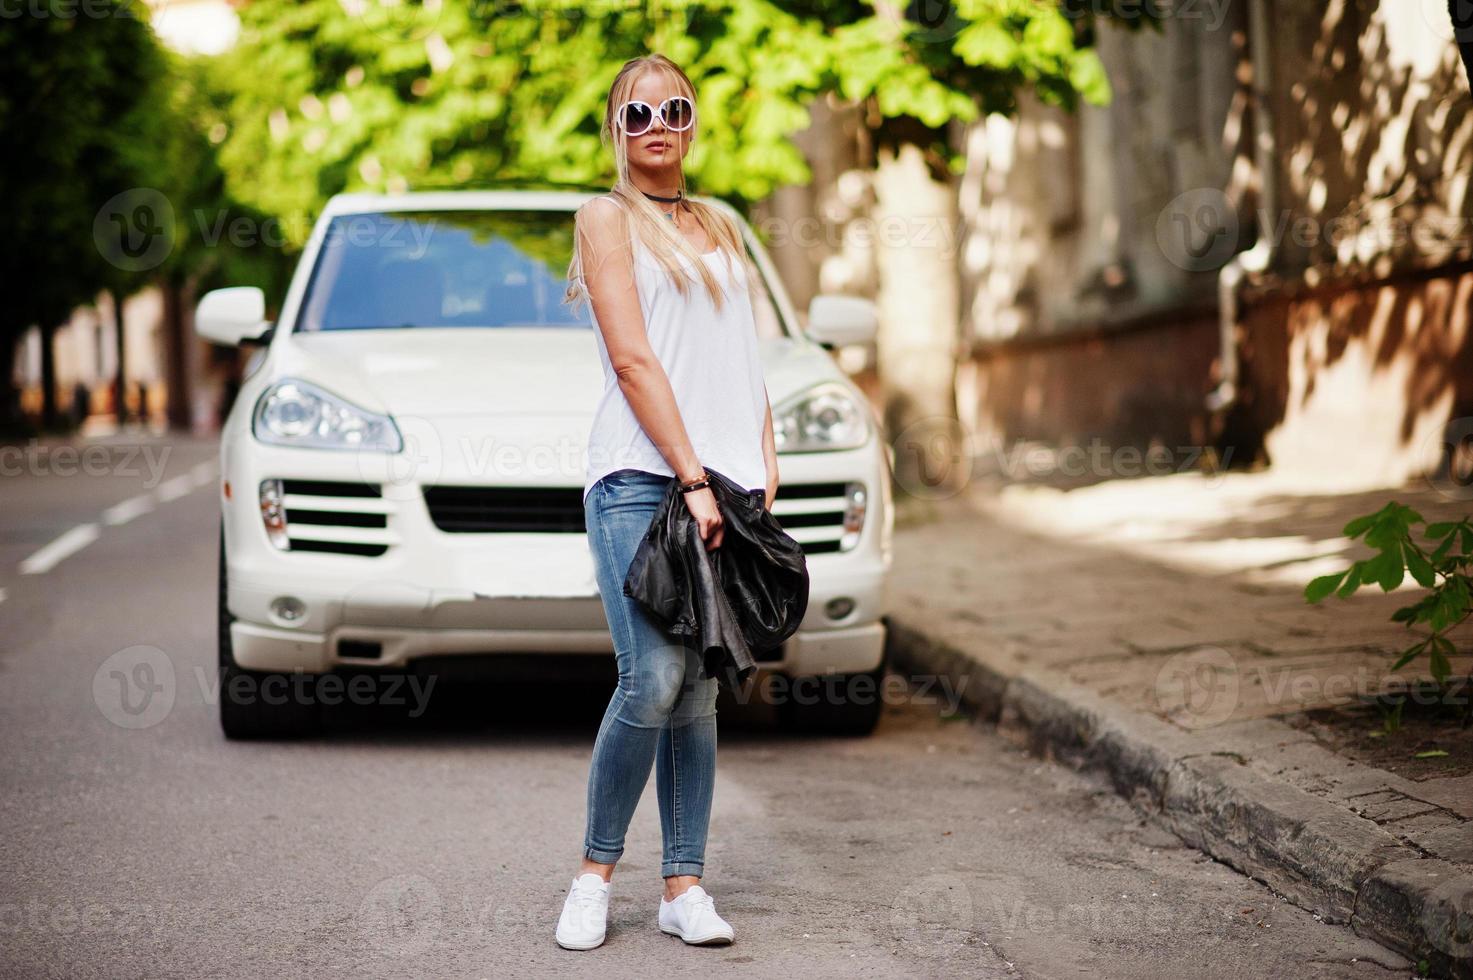 Stylish blonde woman wear at jeans, sunglasses, choker and white shirt against luxury car. Fashion urban model portrait. photo